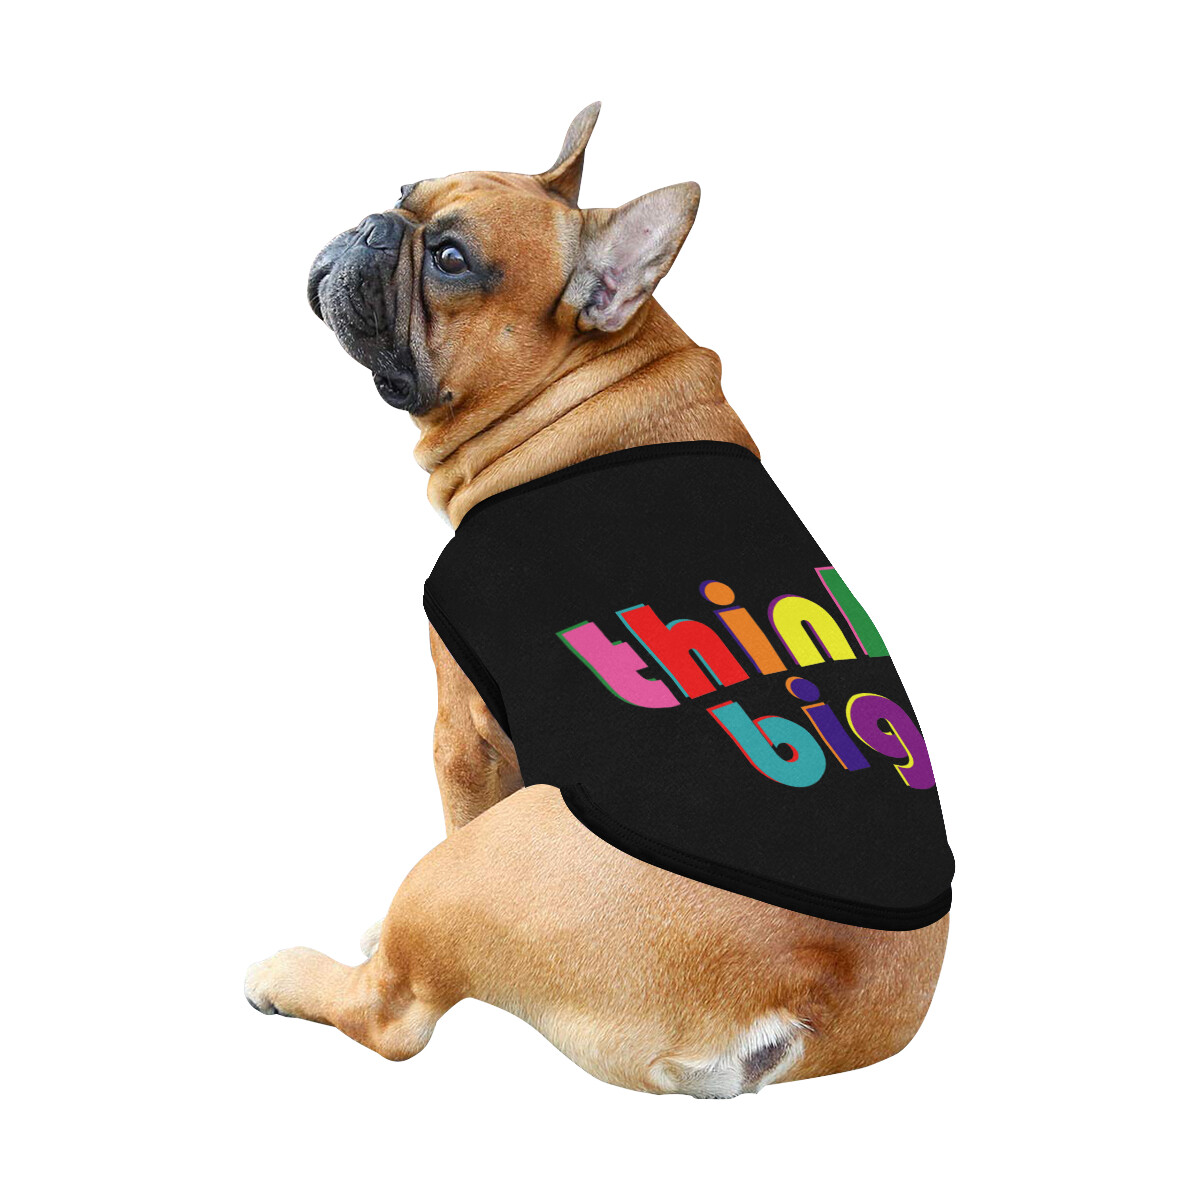 🐕 Think Big Dog shirt Dog Tank Top, Dog t-shirt, Dog clothes, Gifts, front back print, 7 sizes XS to 3XL, dog gifts, black